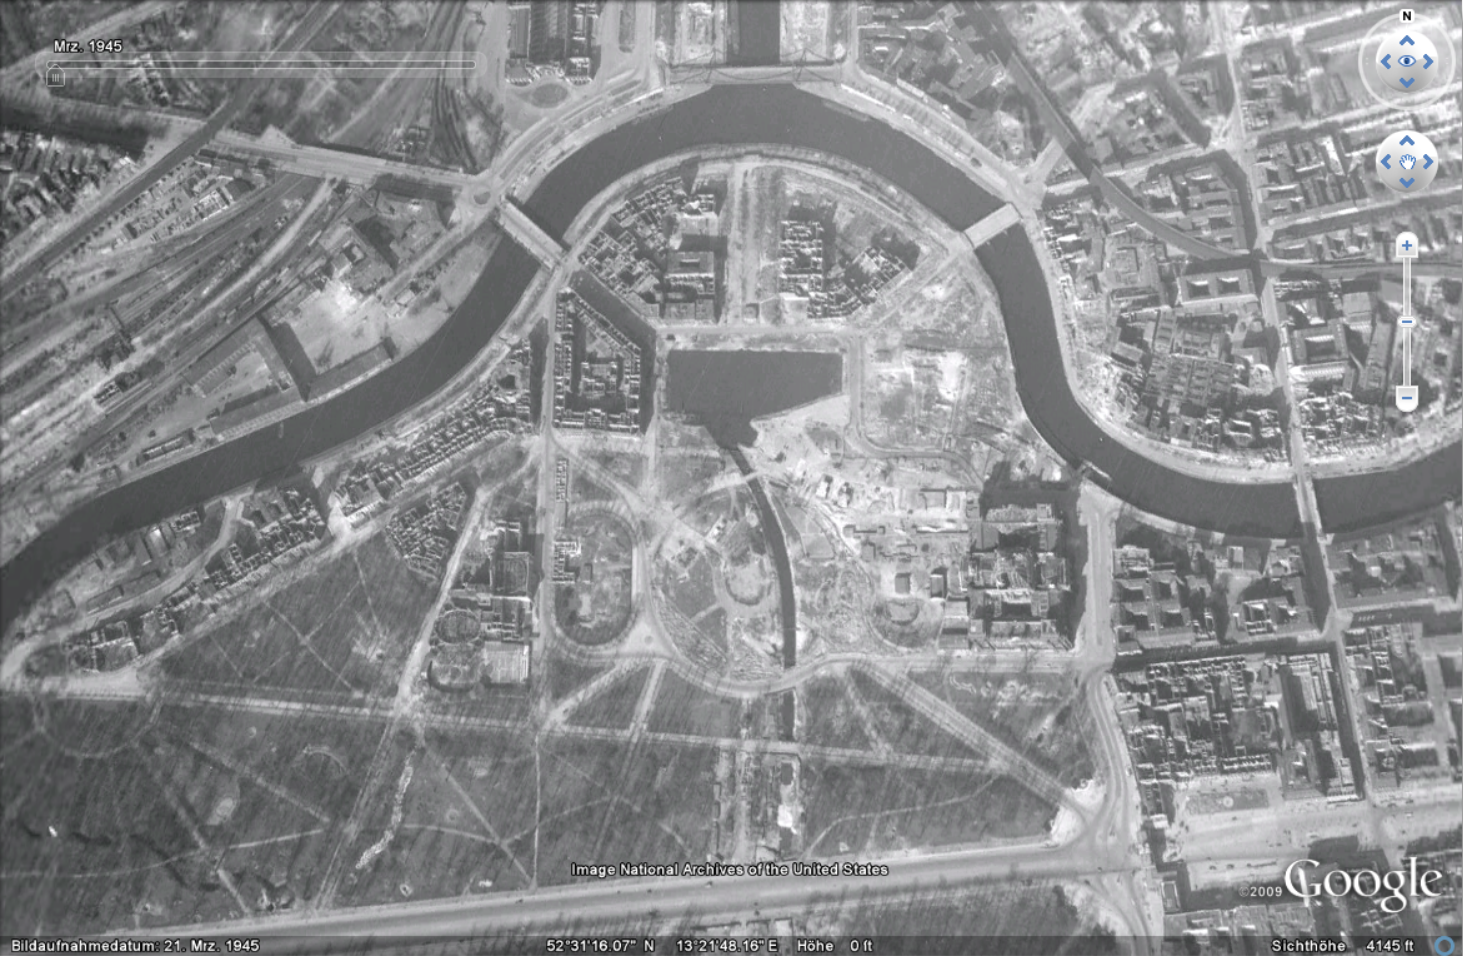 BERLIN APRIL 1945 II